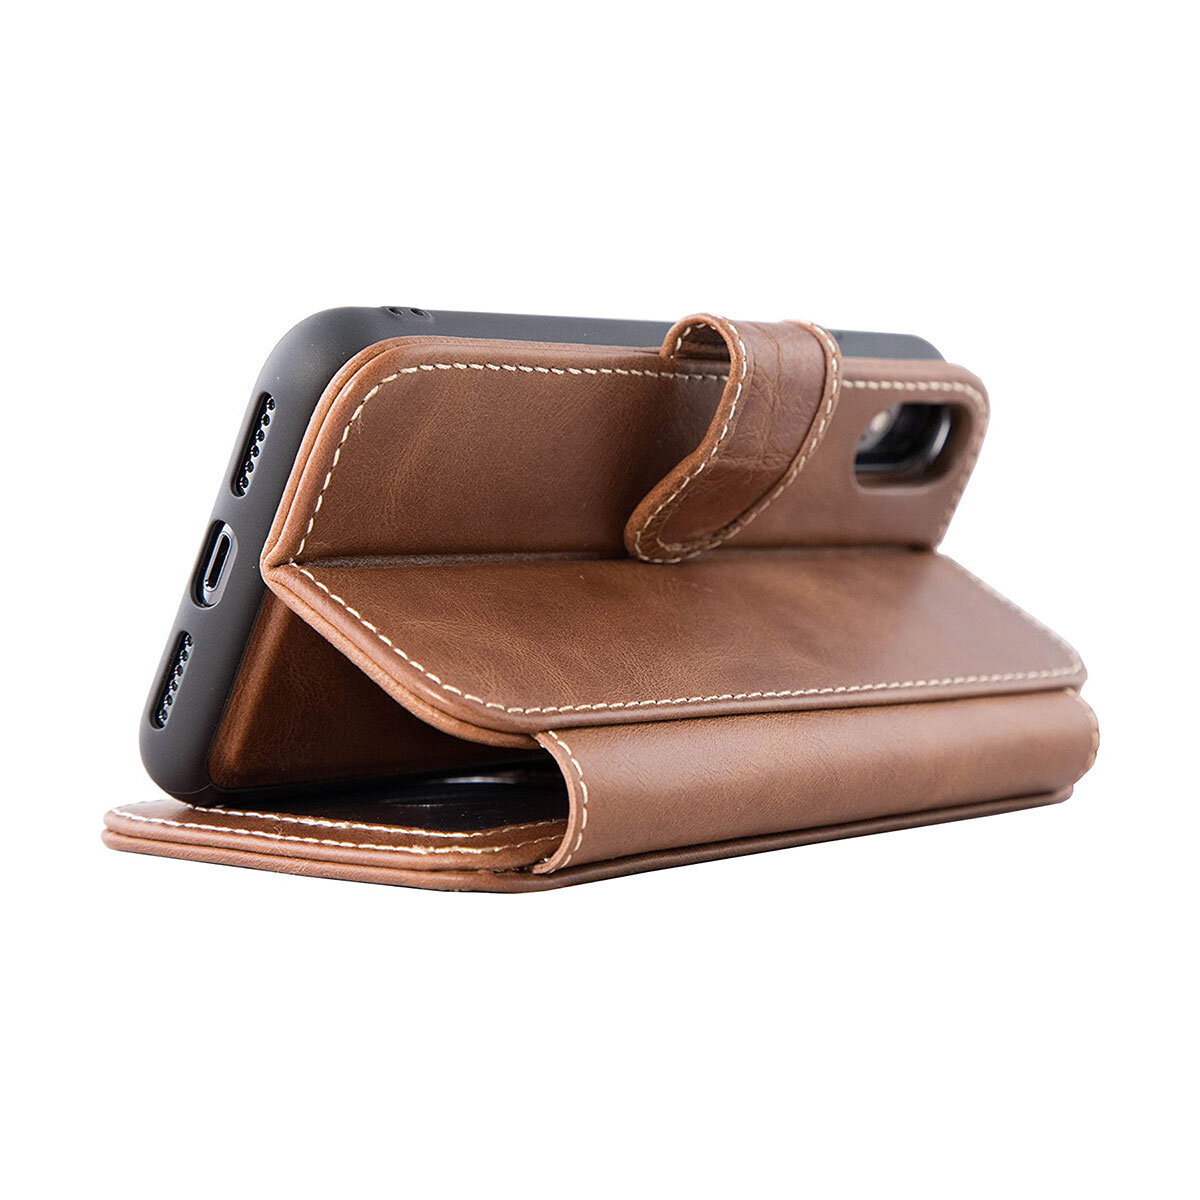  Wilken Genuine Leather iPhone Crossbody Wallet and